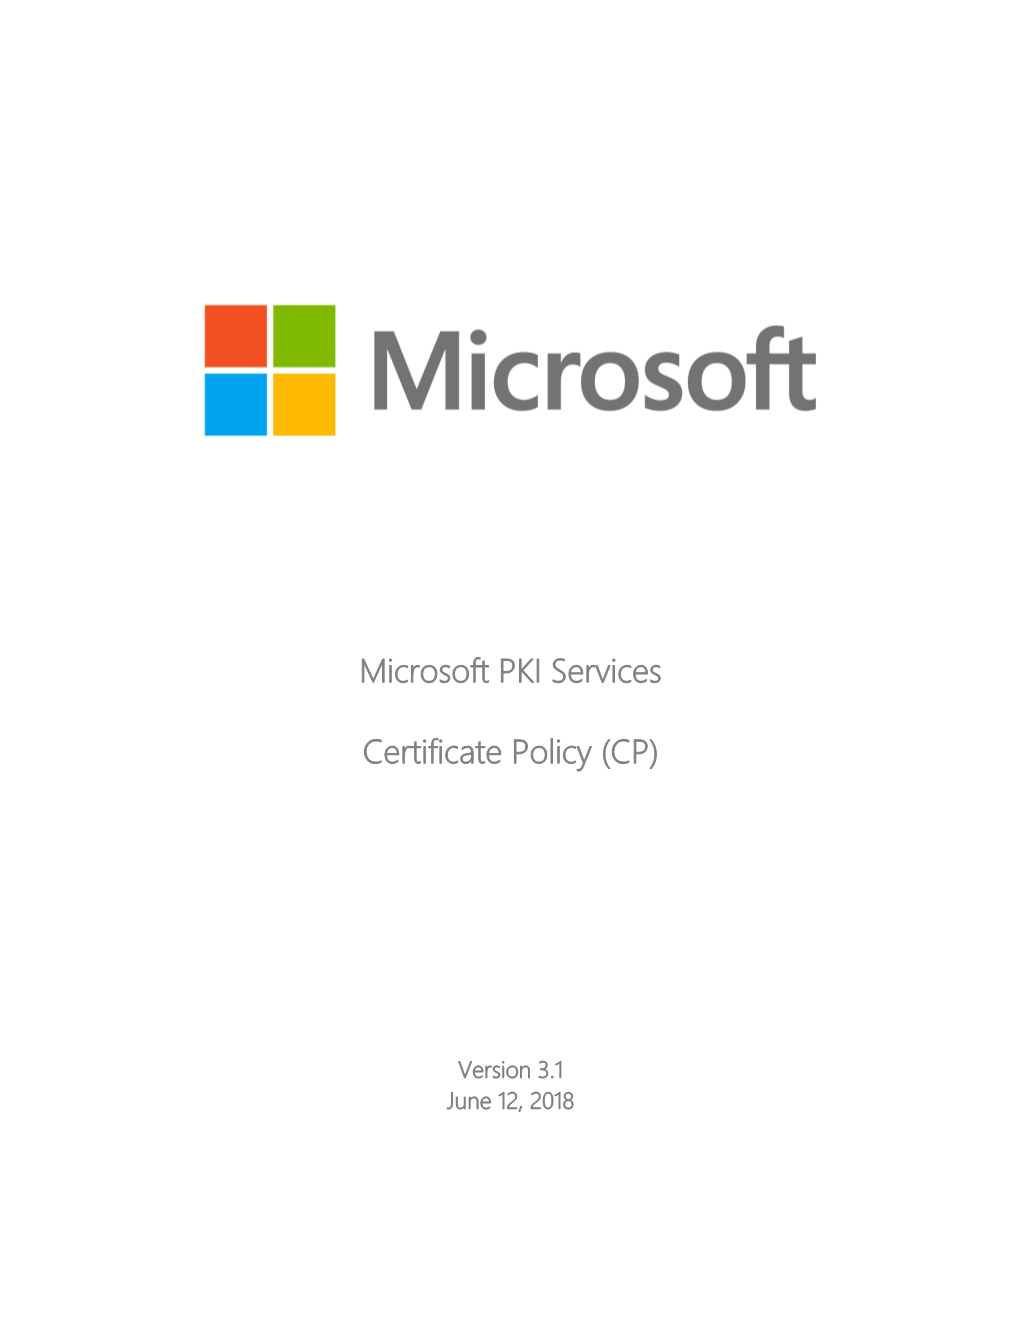 Microsoft PKI Services Certificate Policy (CP) V3.1